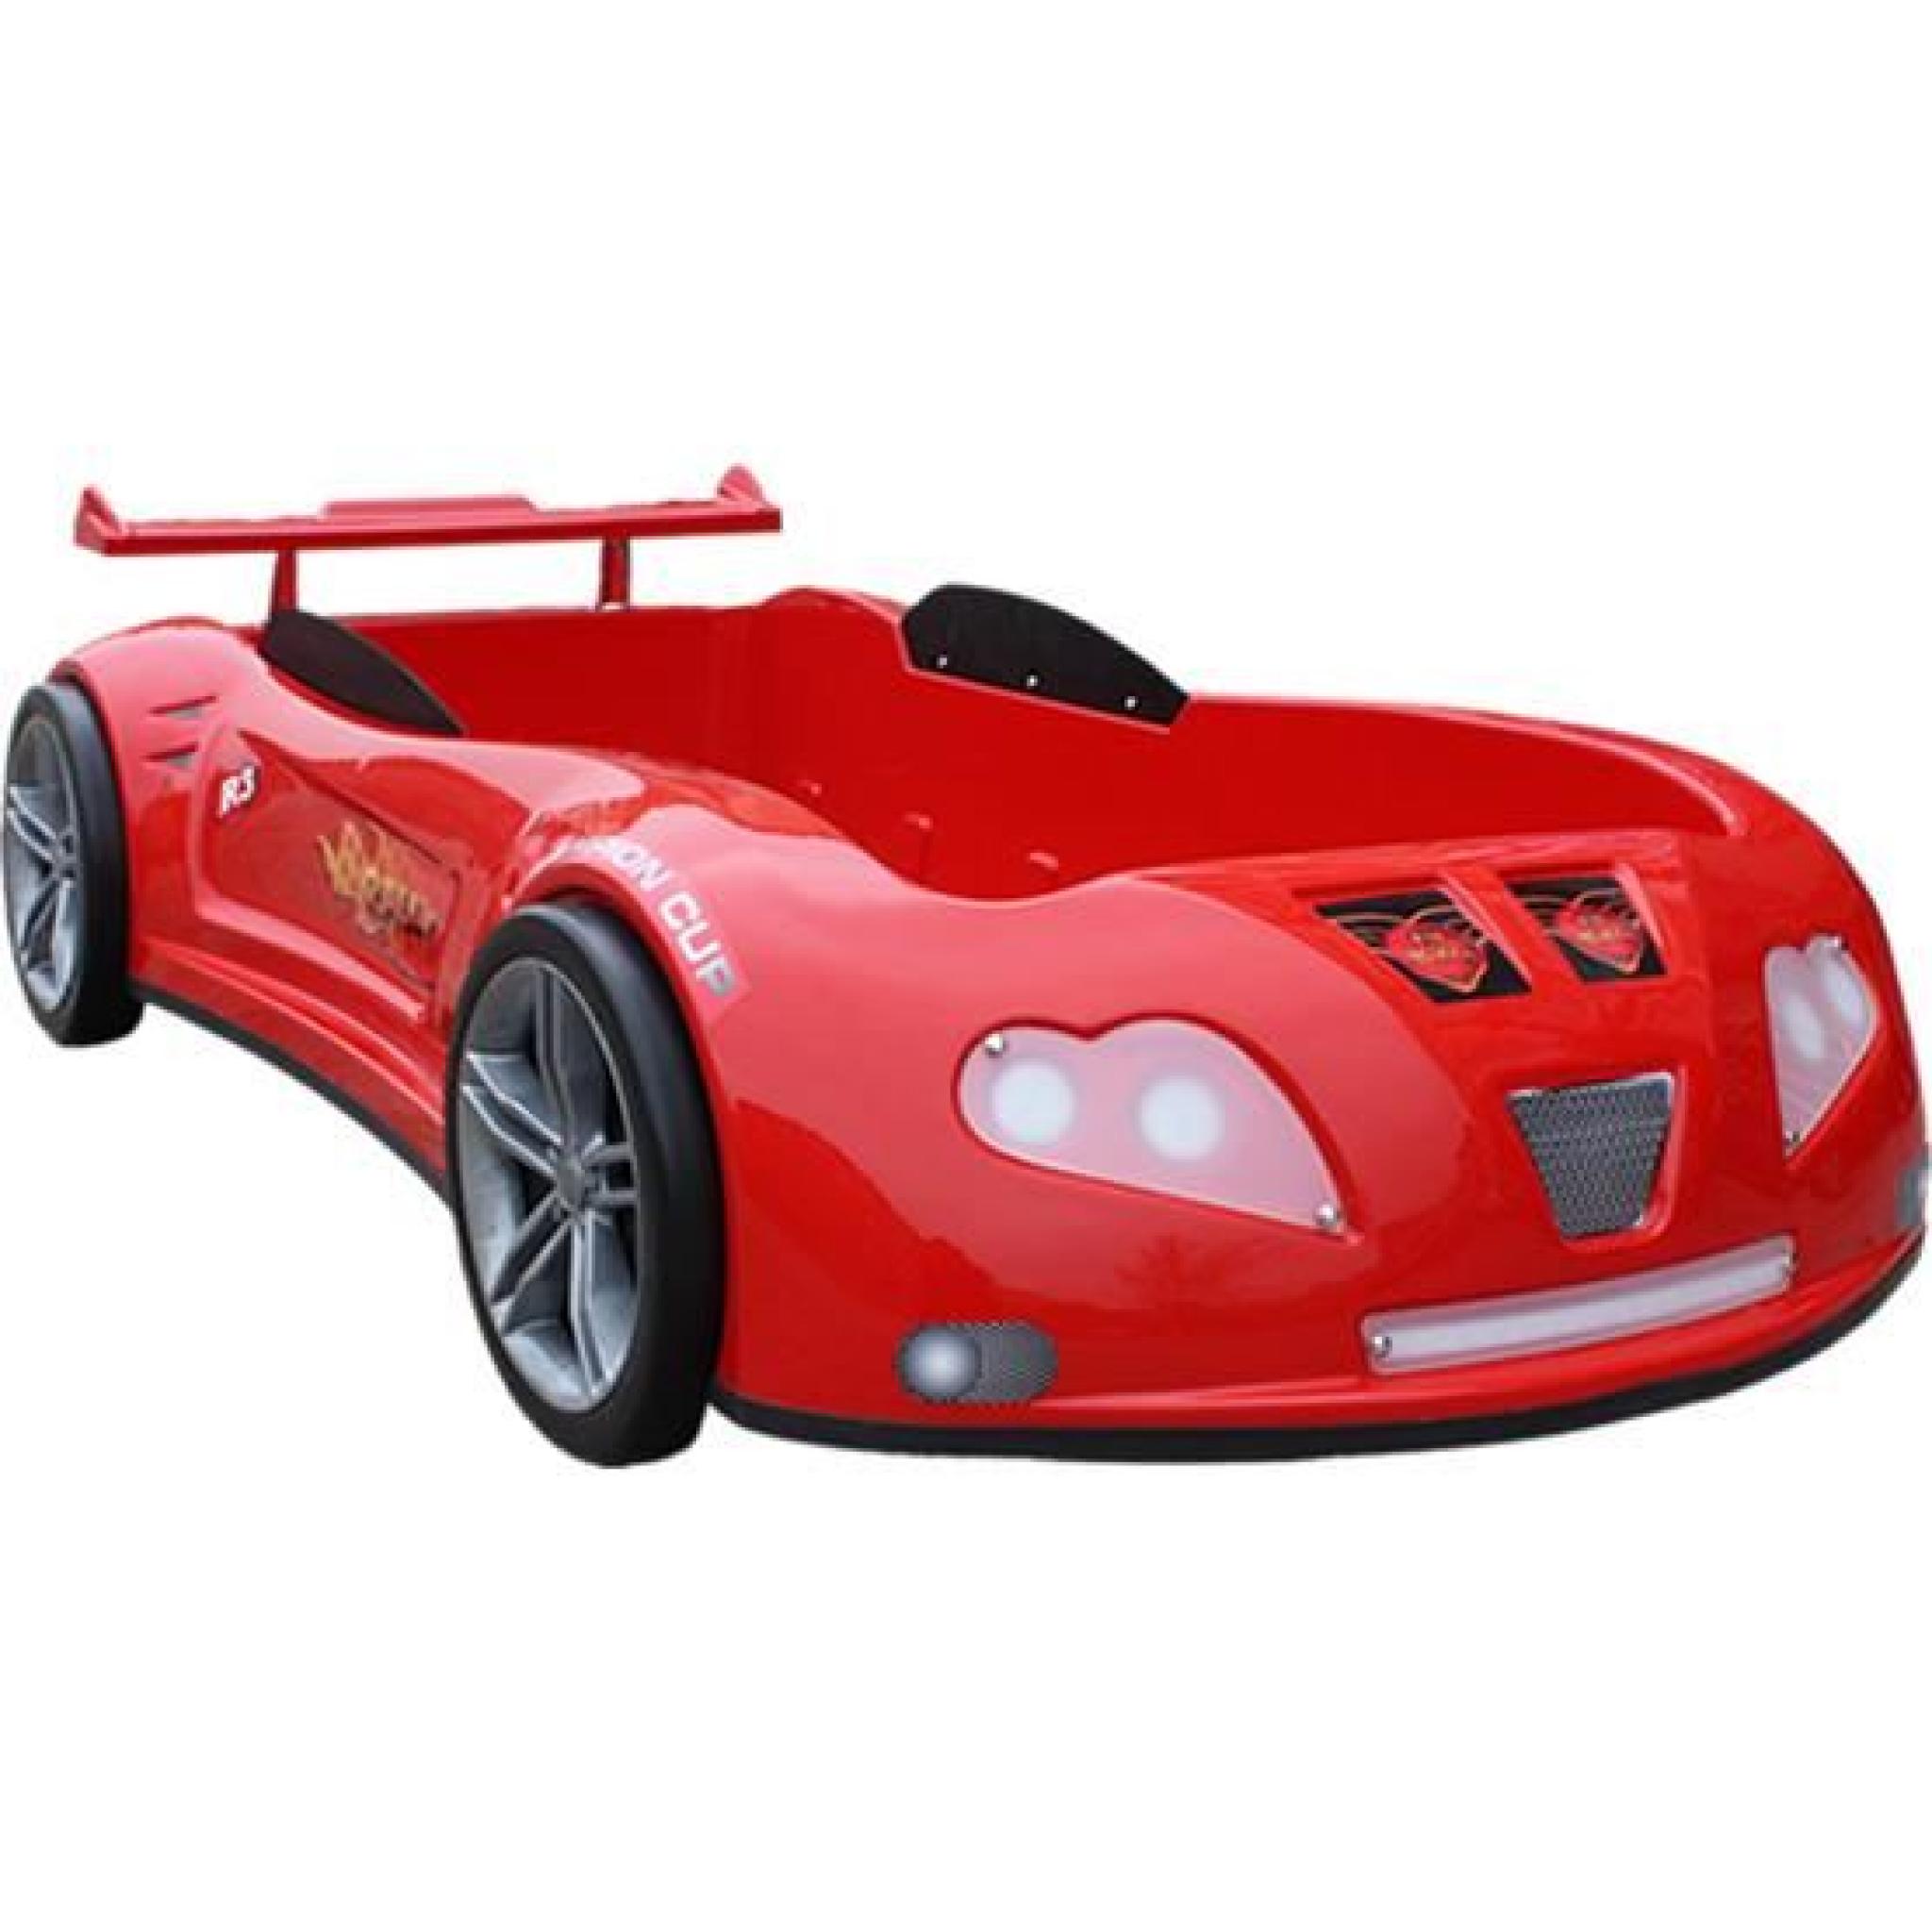 Lit enfant voiture sport Airfree rouge   